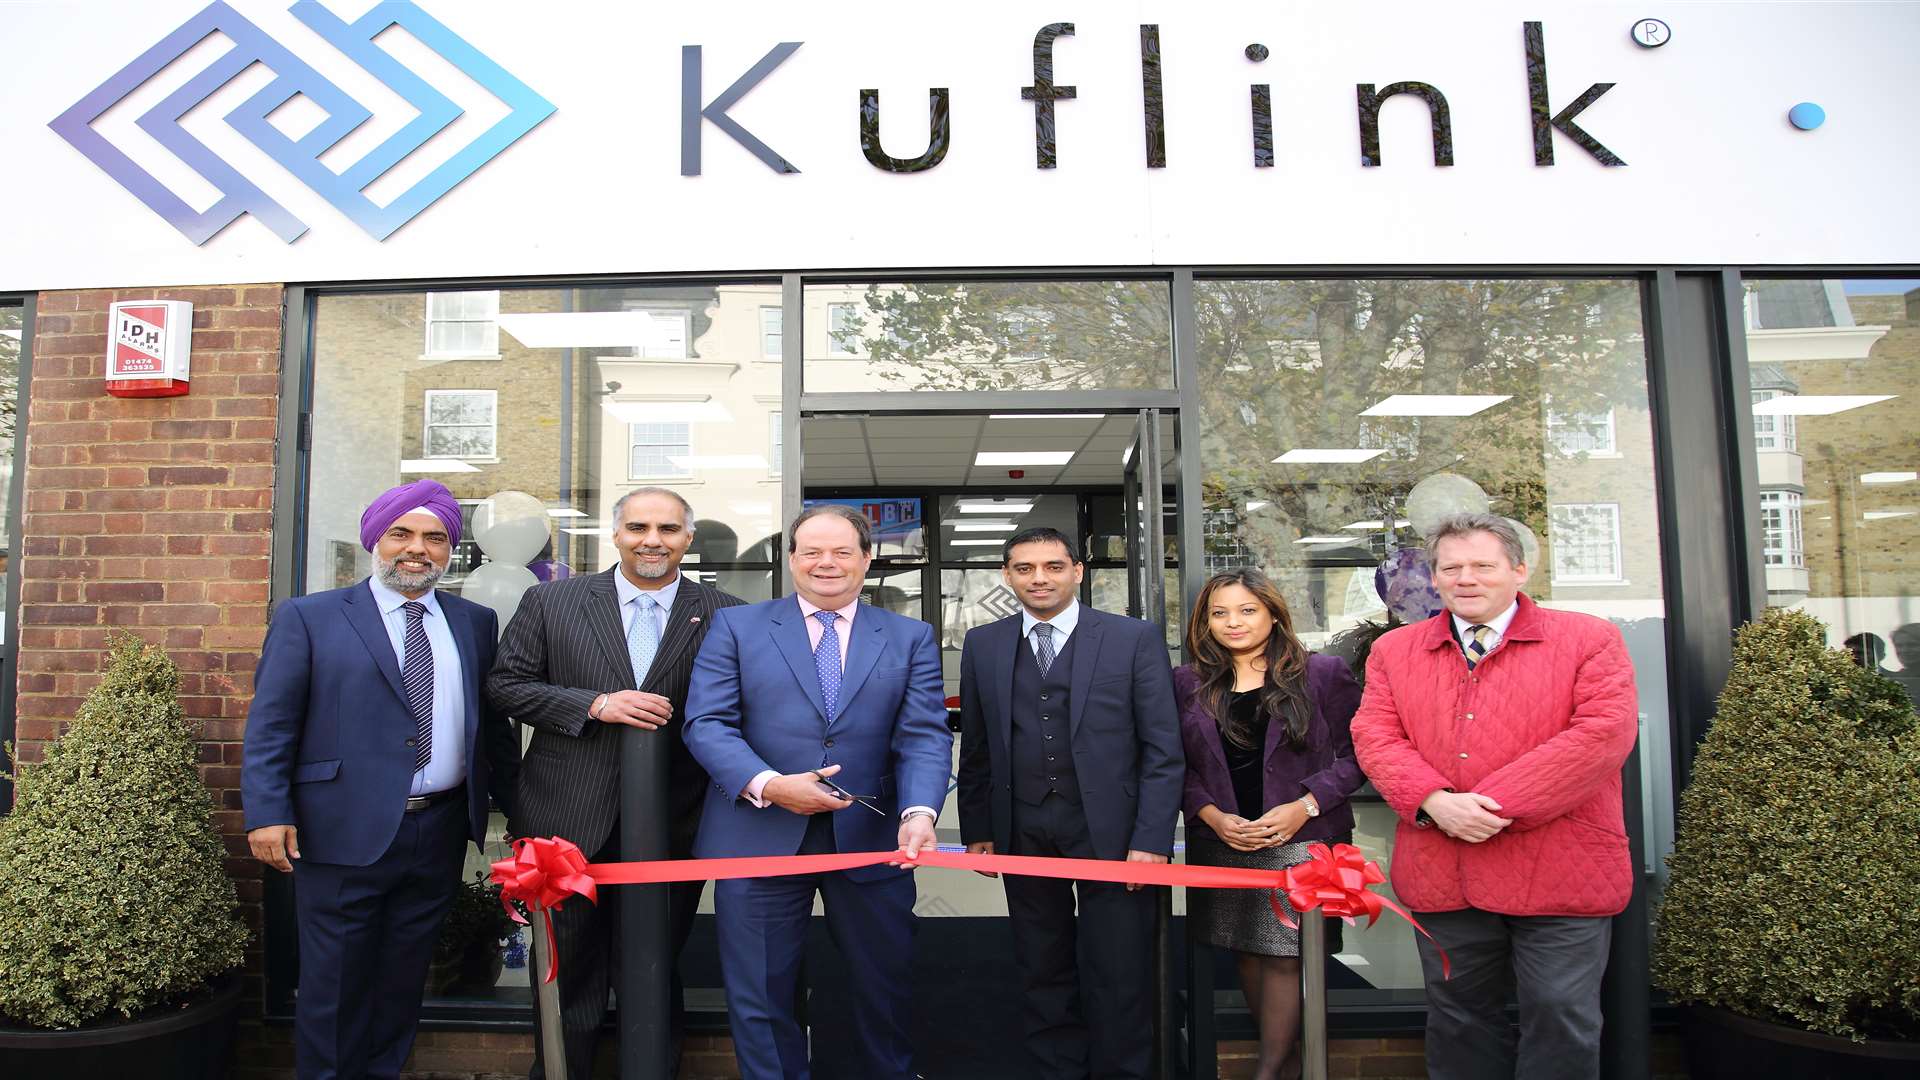 The Kuflink office is opened by, from left, Harwinder Singh, Rawinder Singh Binning, Stephen Hammond MP, Tarlochan Garcha, Darshana Ubl and Adam Holloway MP